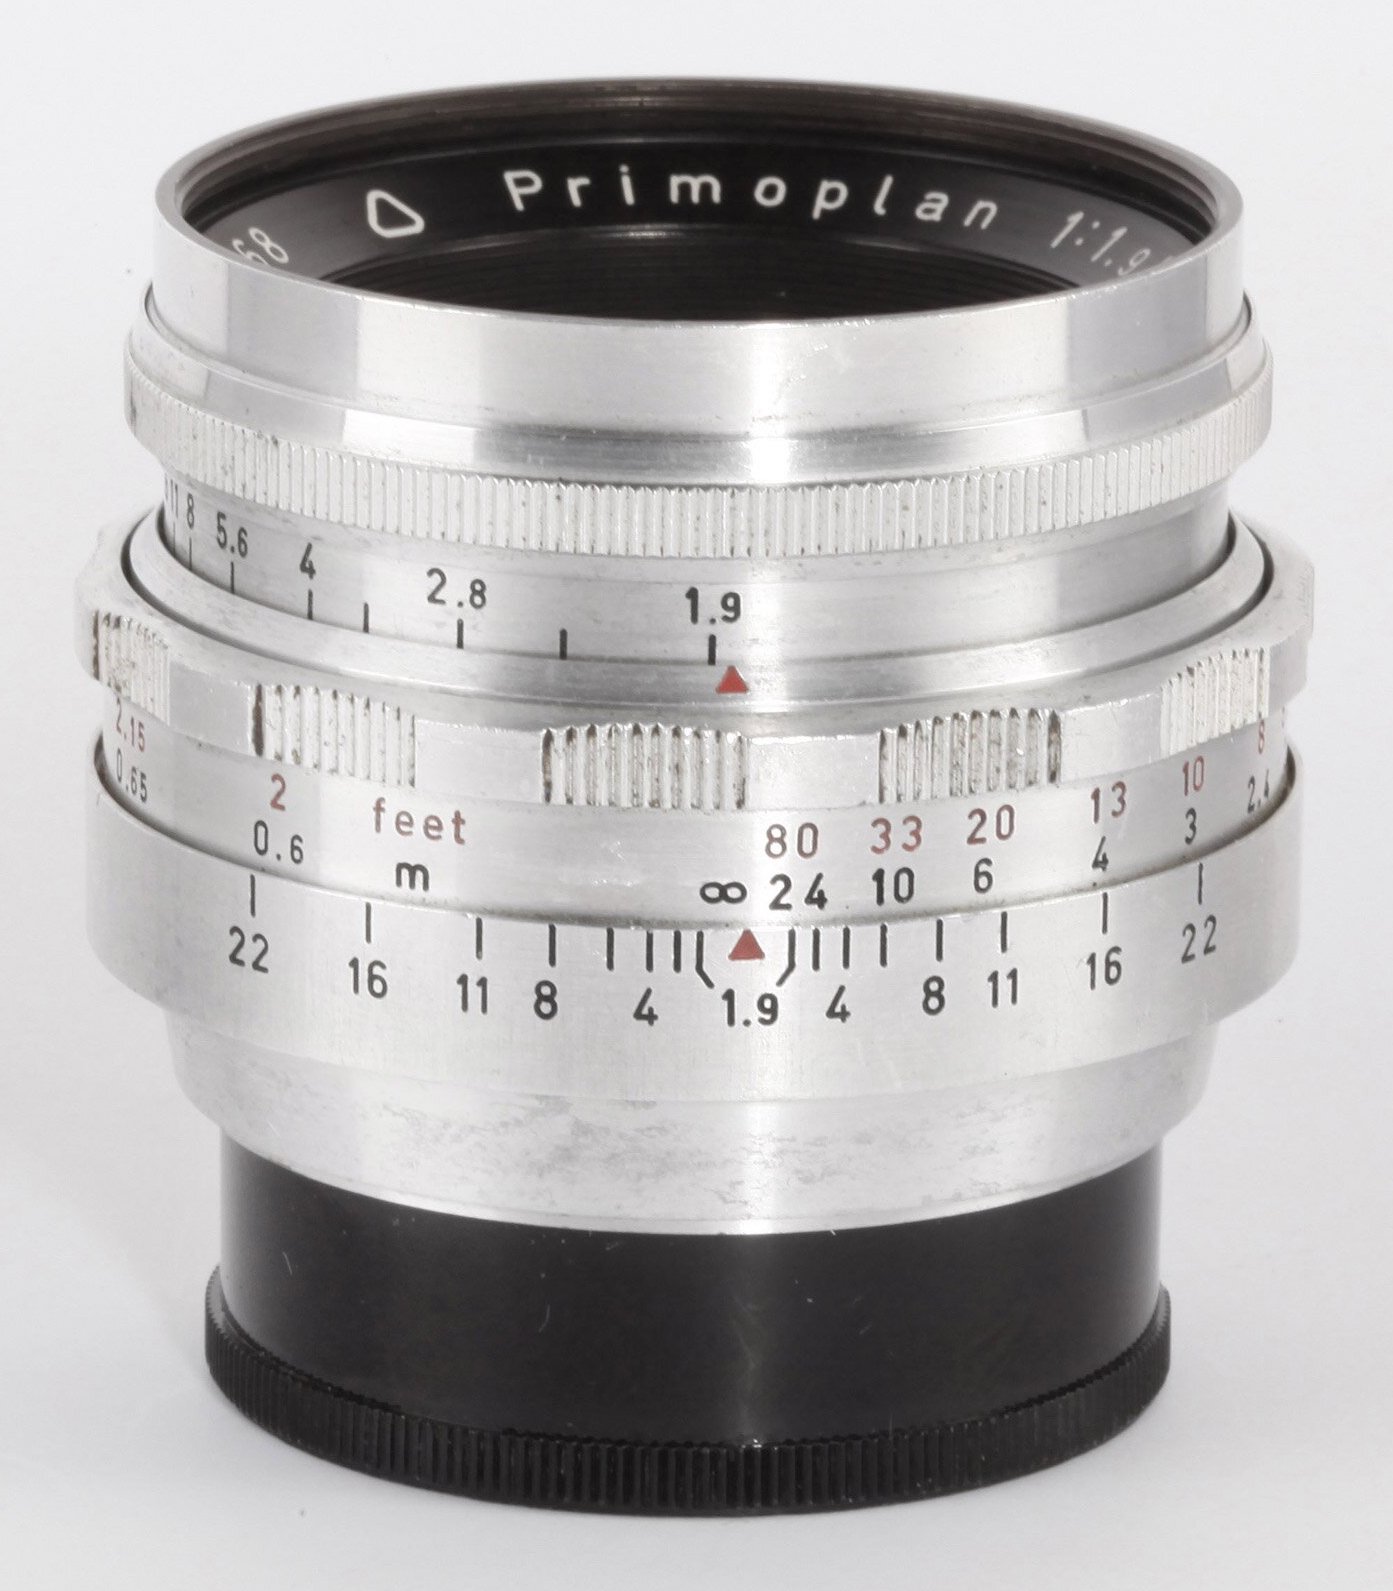 Meyer-Optik Gorlitz Primoplan 58mm F/1.9 V | LENS-DB.COM